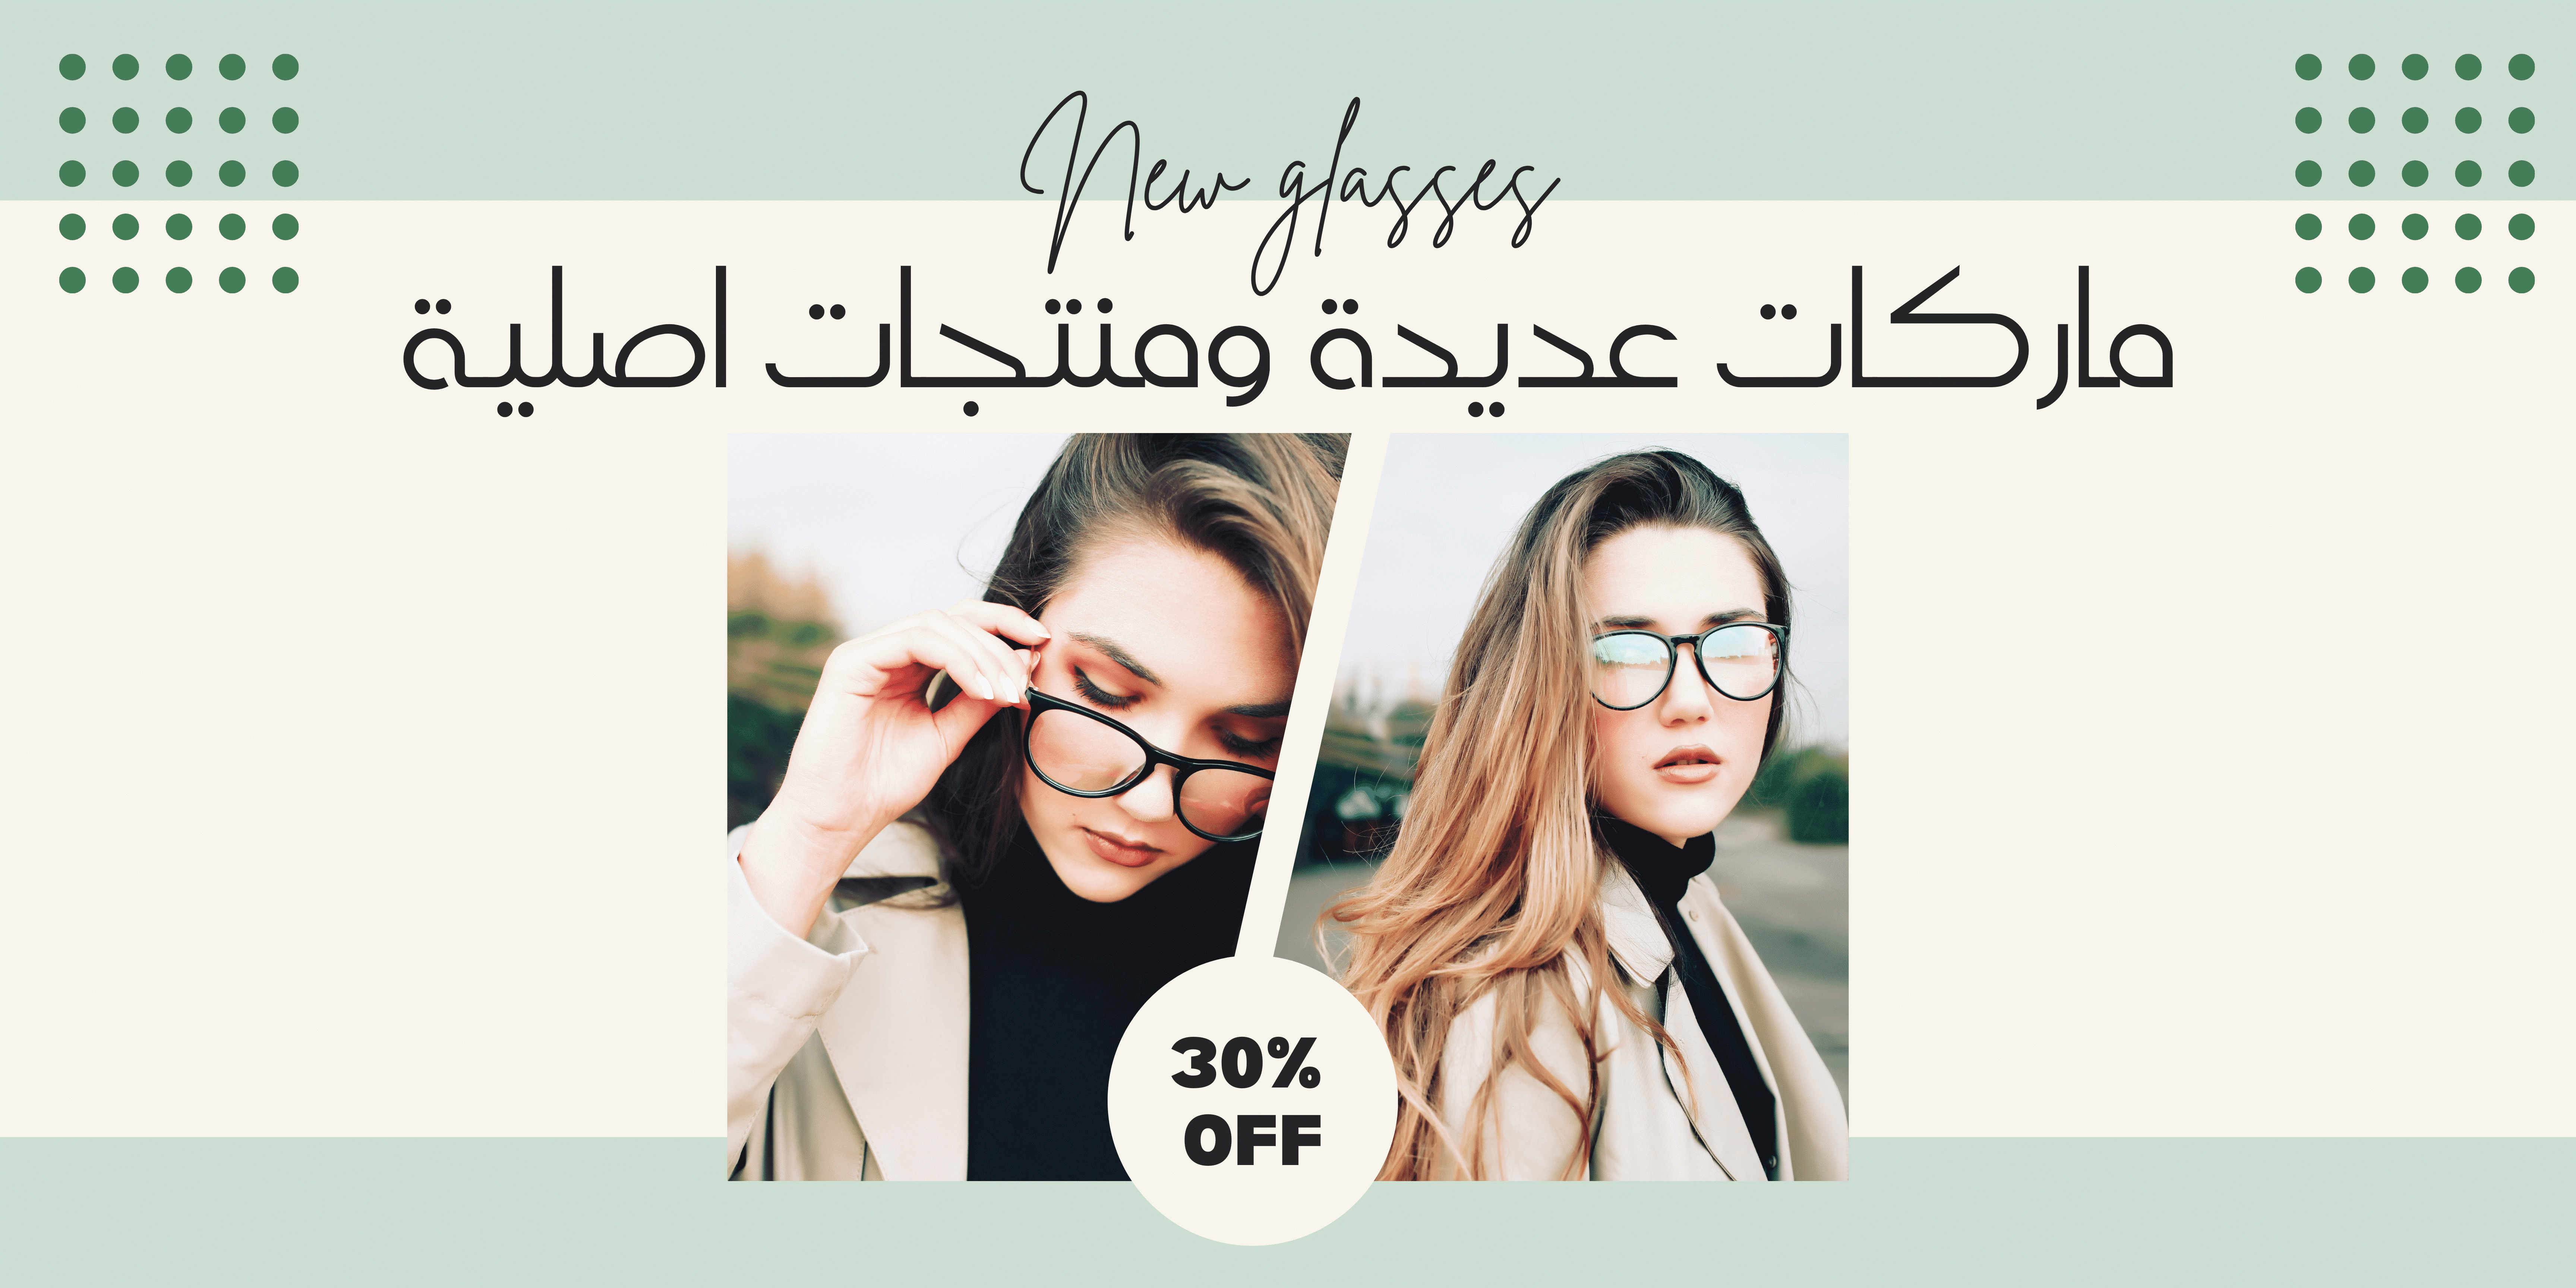 مغربي 6 2 1 1 1 كود خصم مغربي للنظارات بقيمة 40% | Magrabi Promo Code